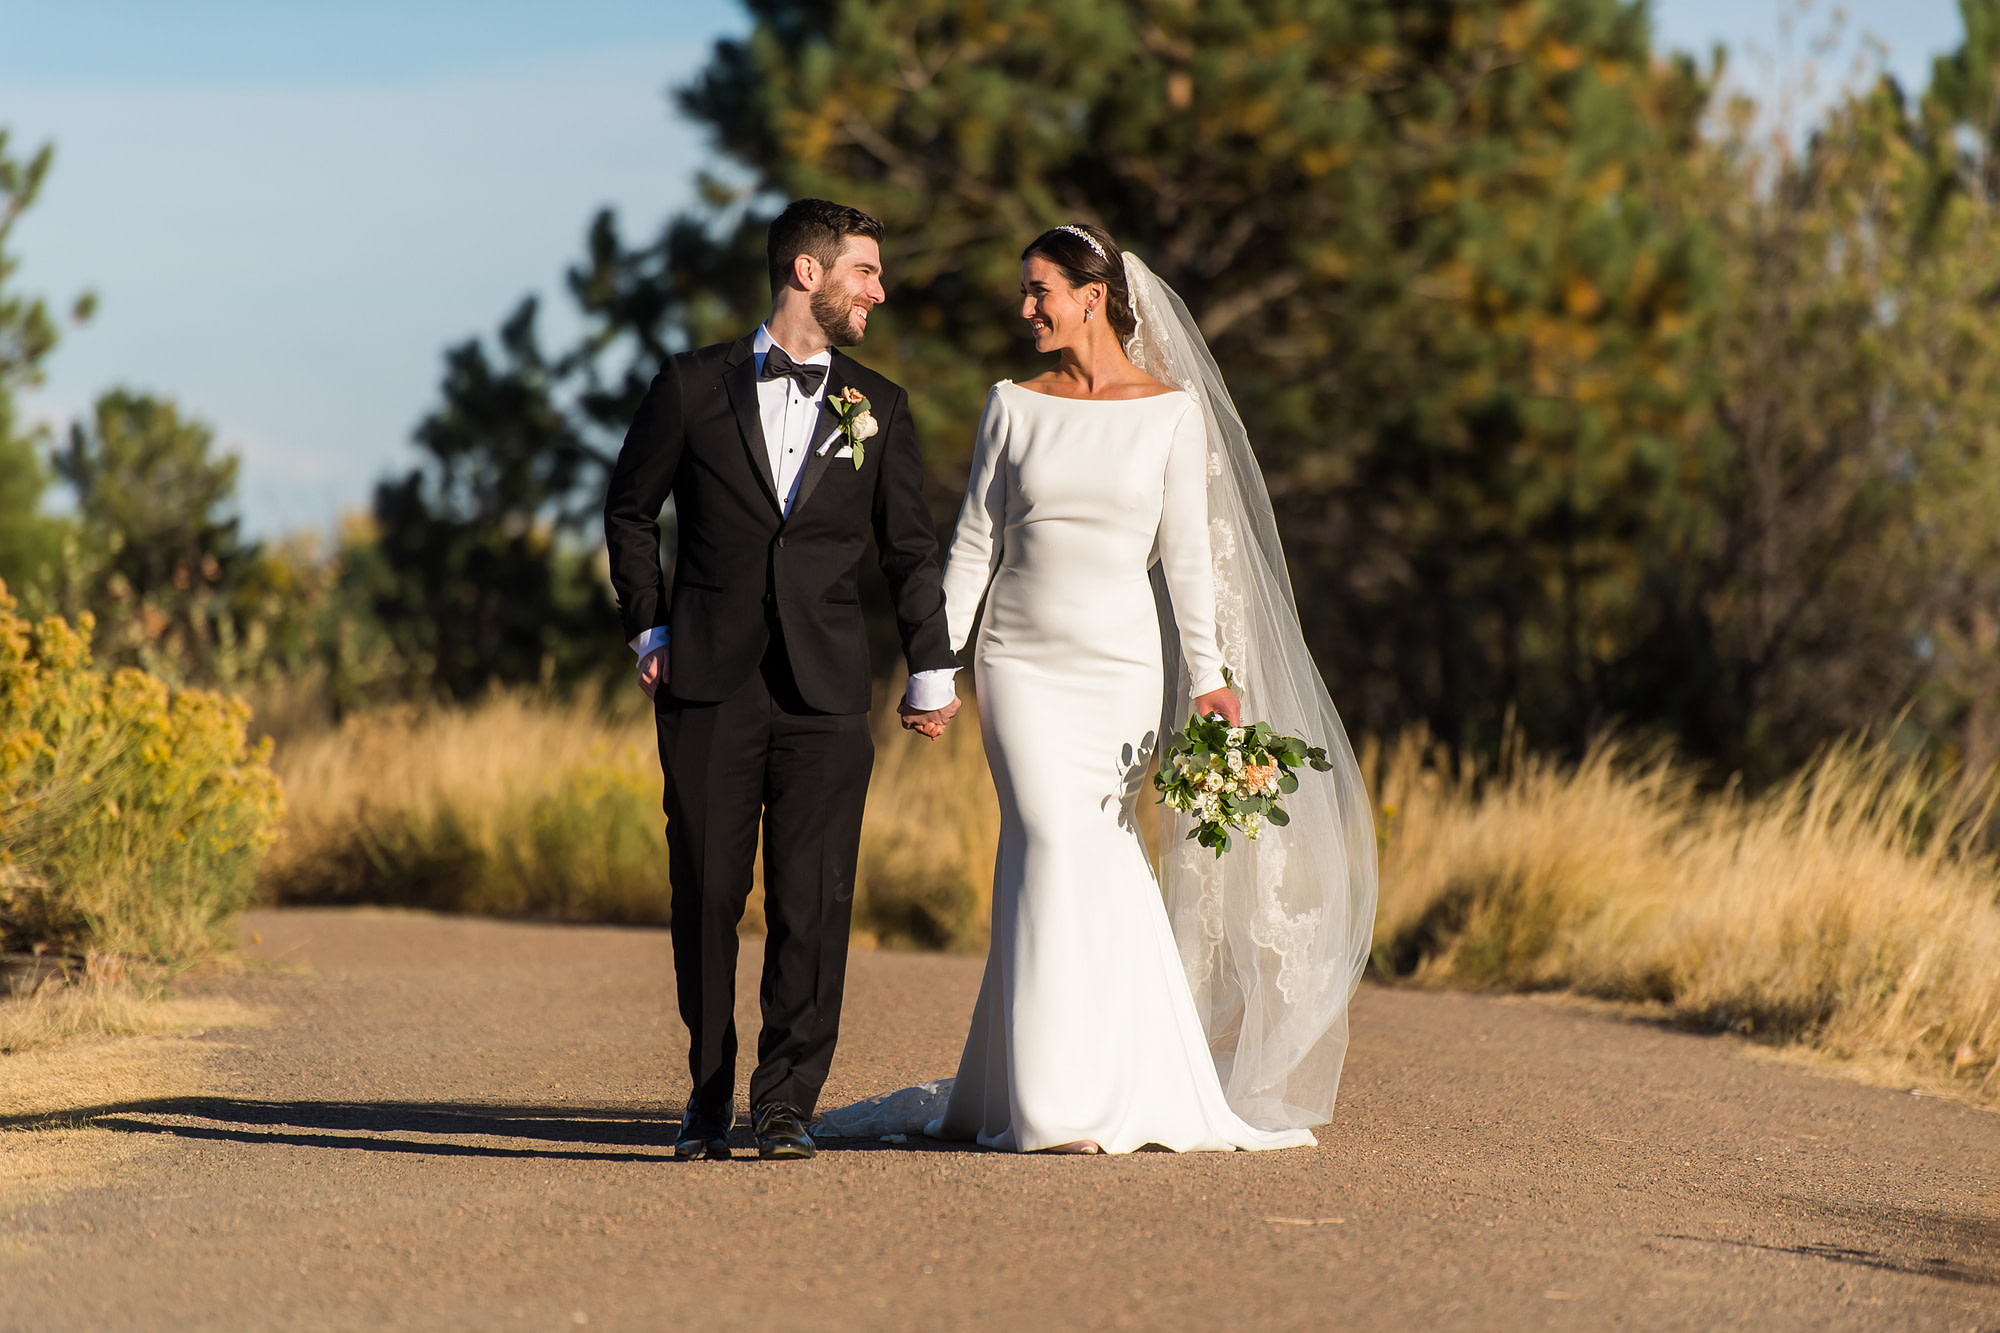 Bride and groom walk during wedding photo portraits at Belmar Park in Lakewood, Colorado.